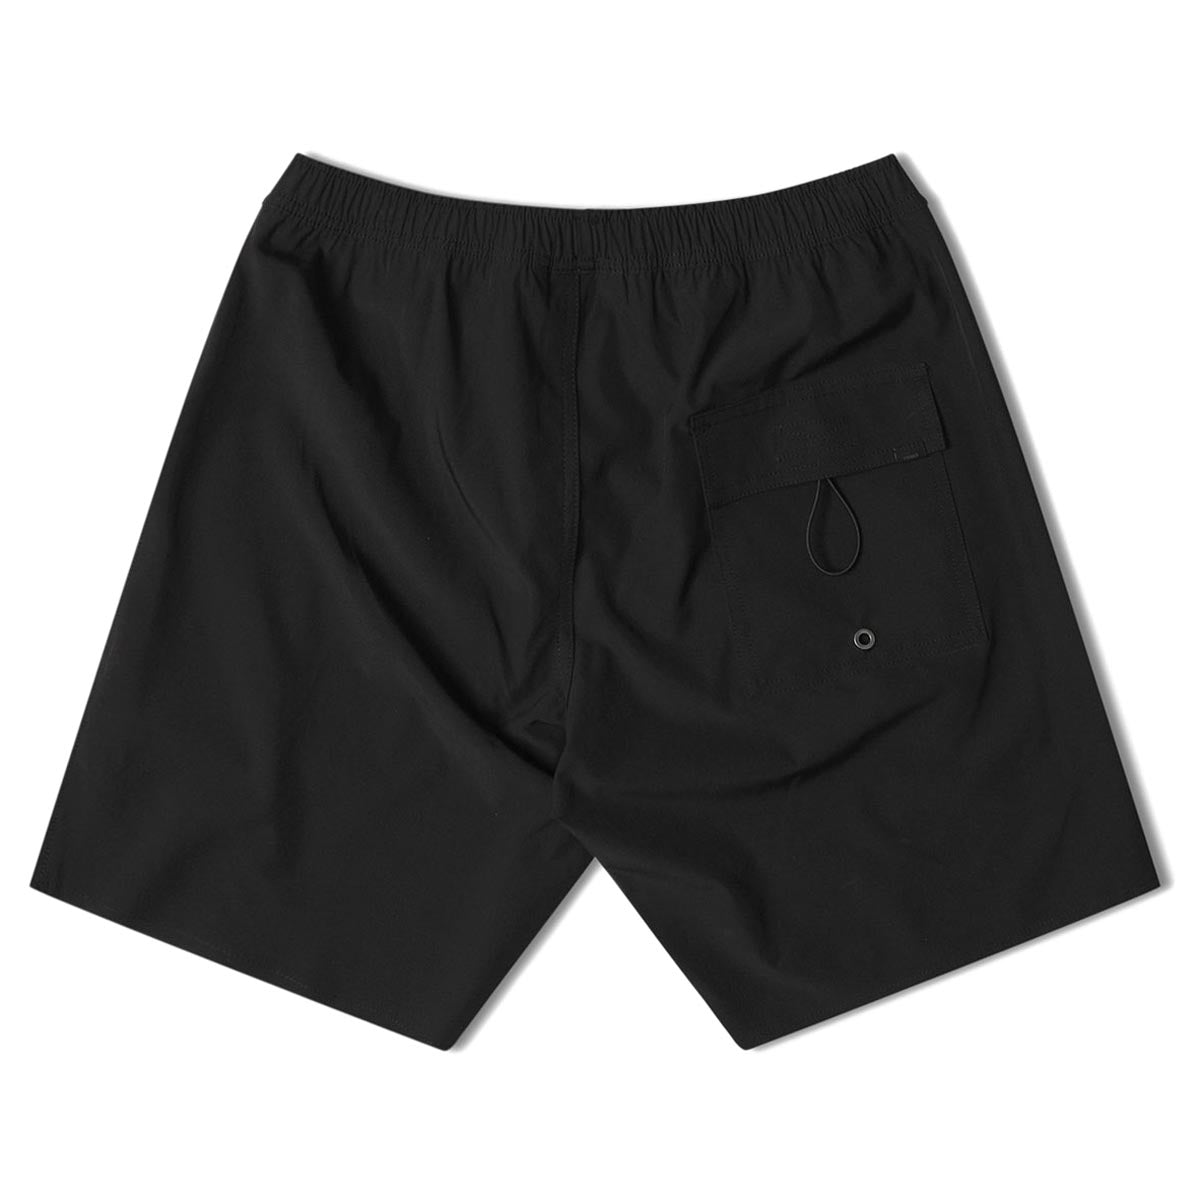 Former Swans Fray Swim Trunk Shorts - Black/Orange image 5